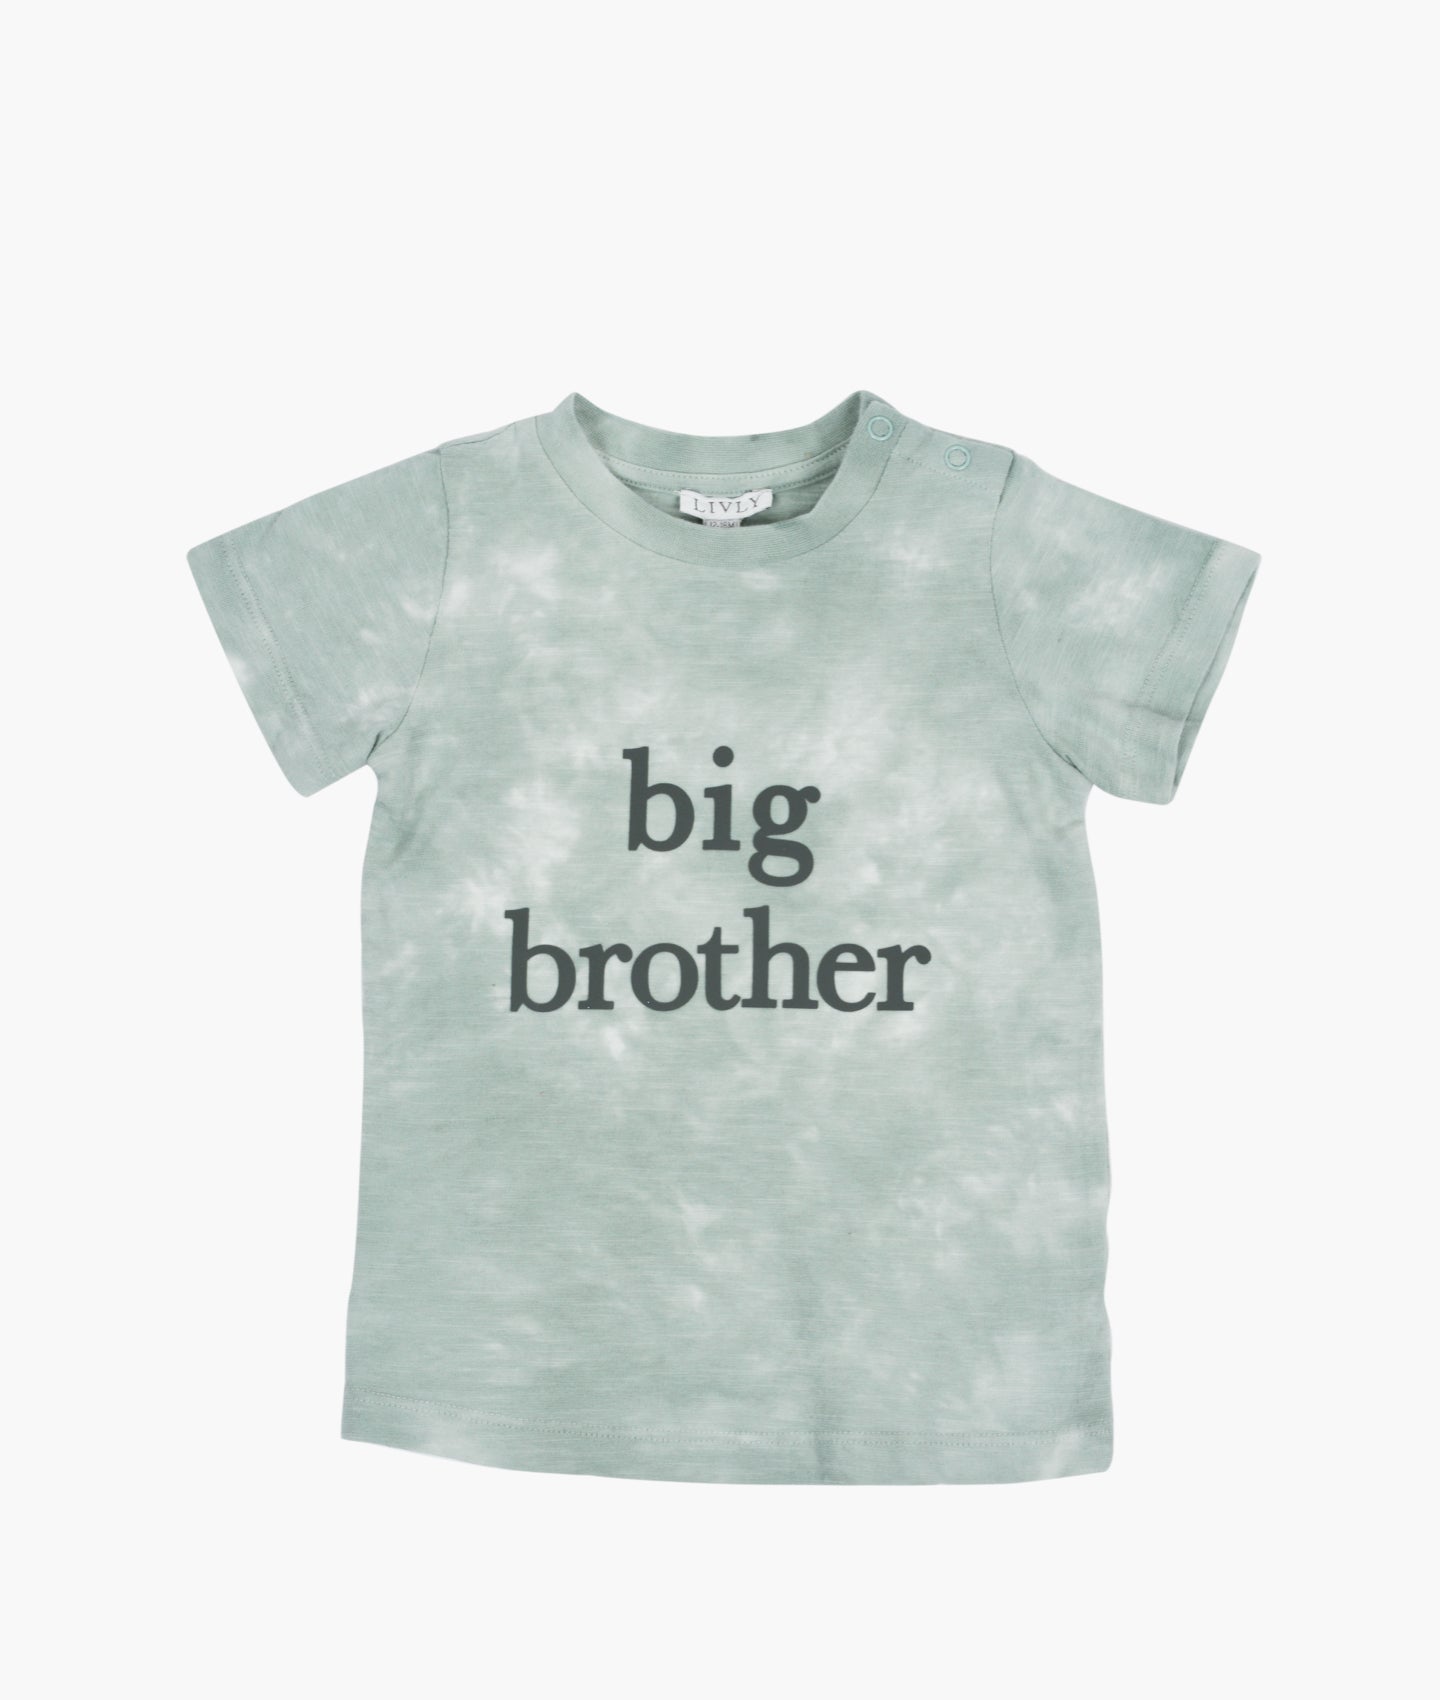 – LIVLY US T-shirt Big Brother